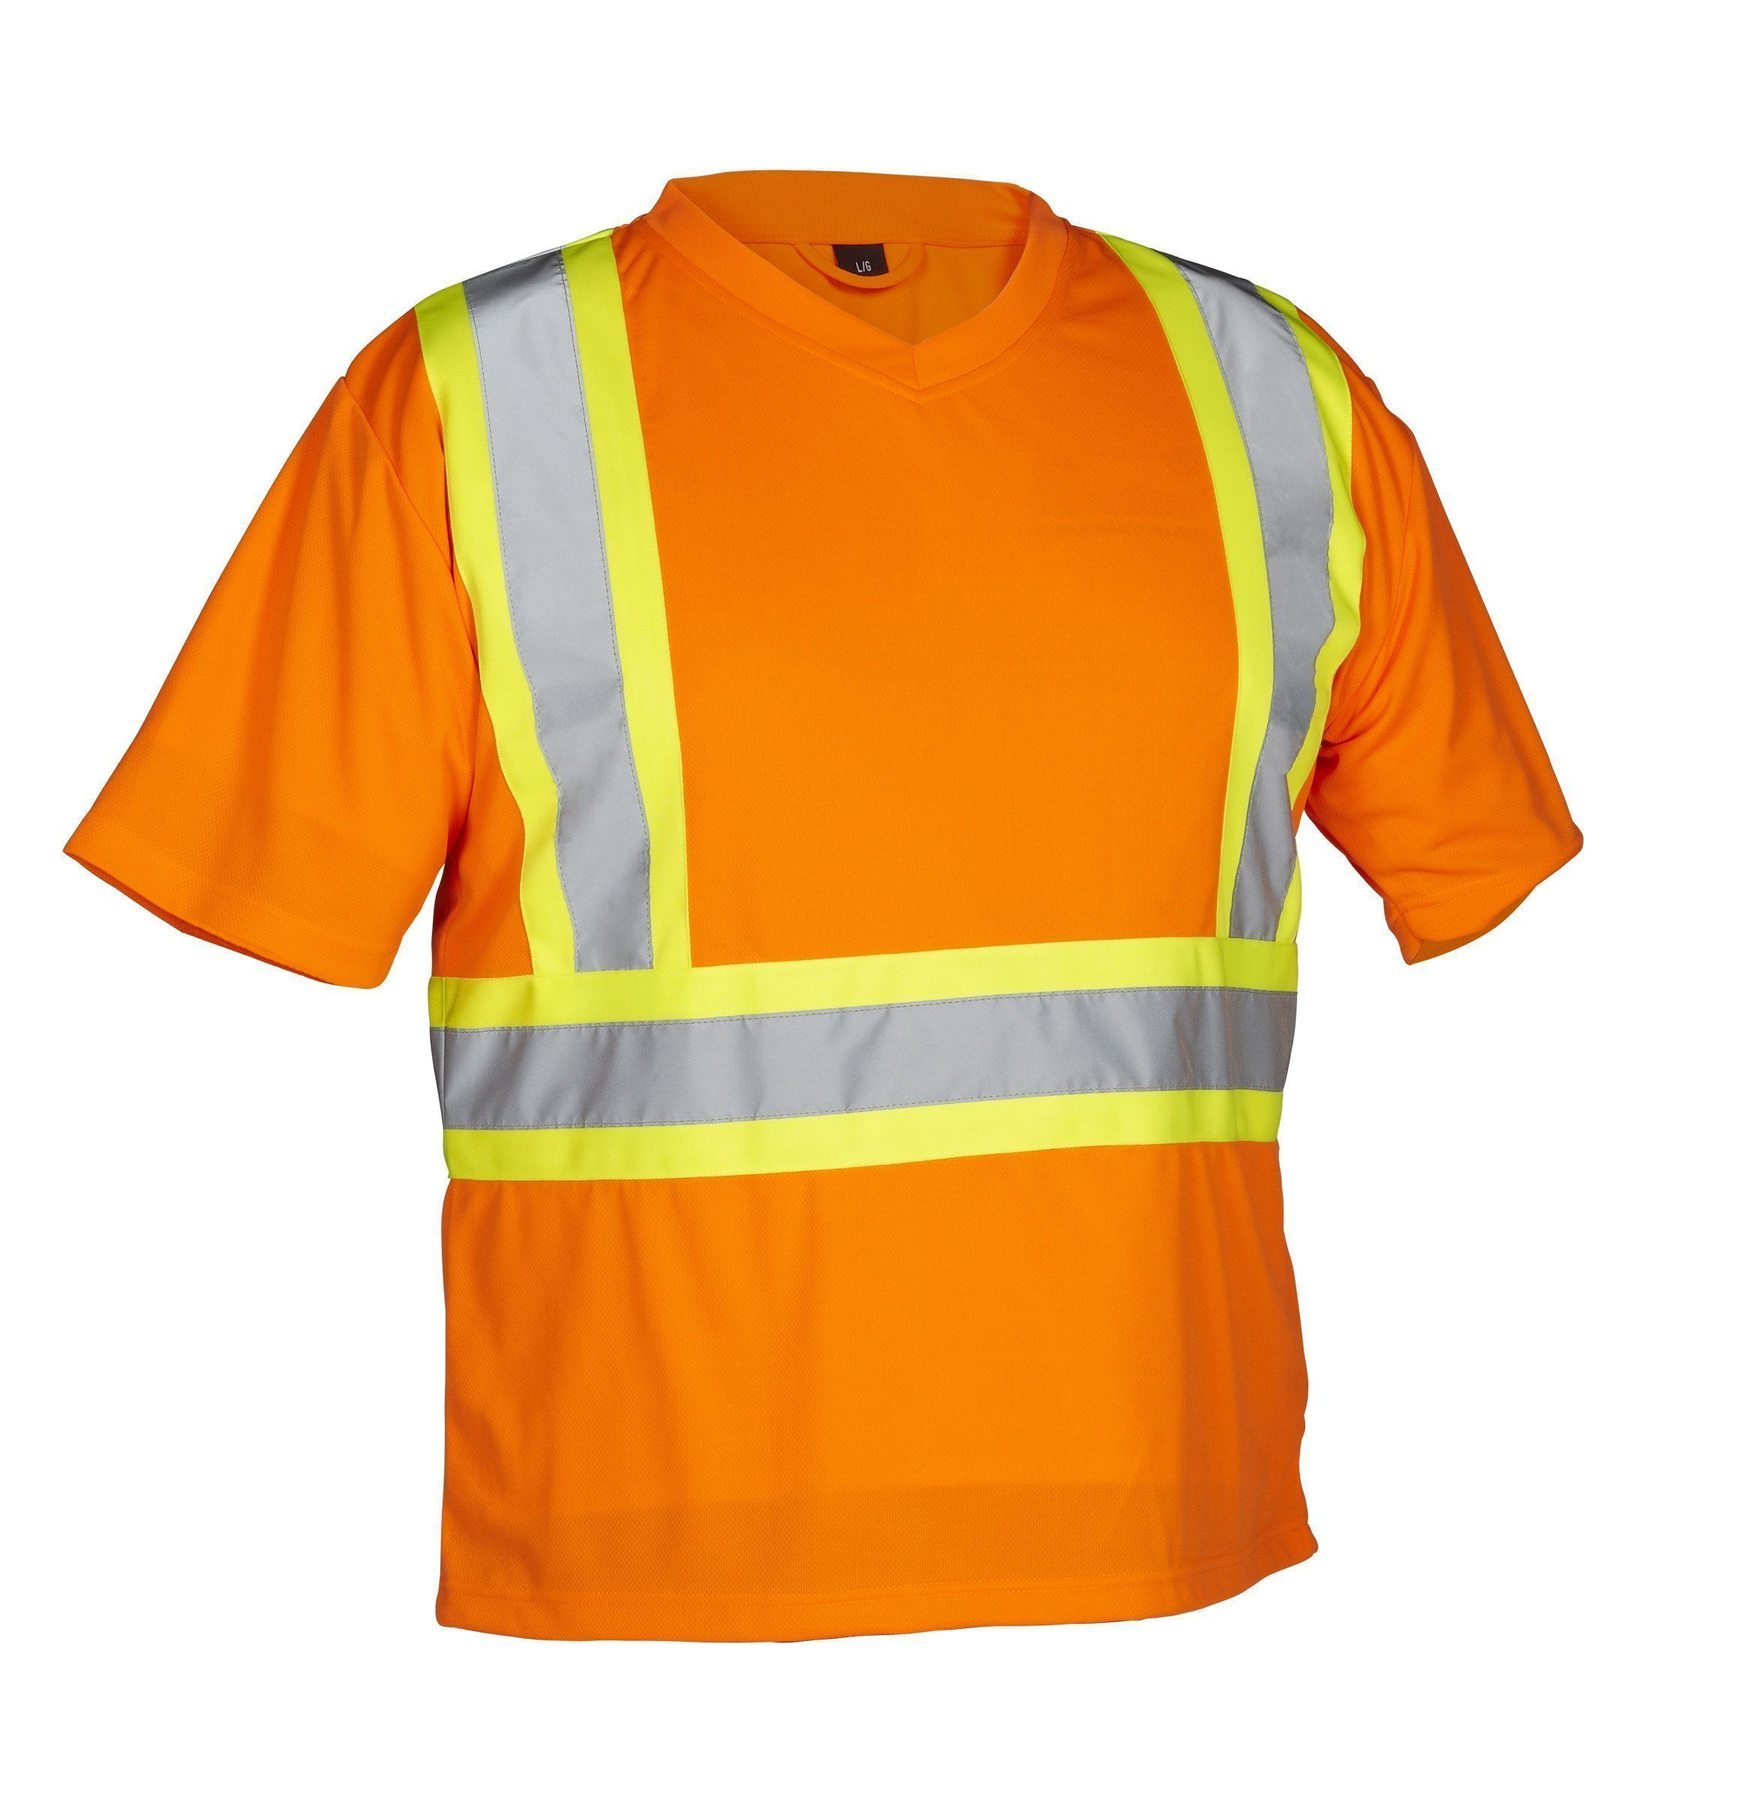 Forcefield Hi Vis V-Neck Short Sleeve Safety Tee Shirt - Rumors Safety Zone